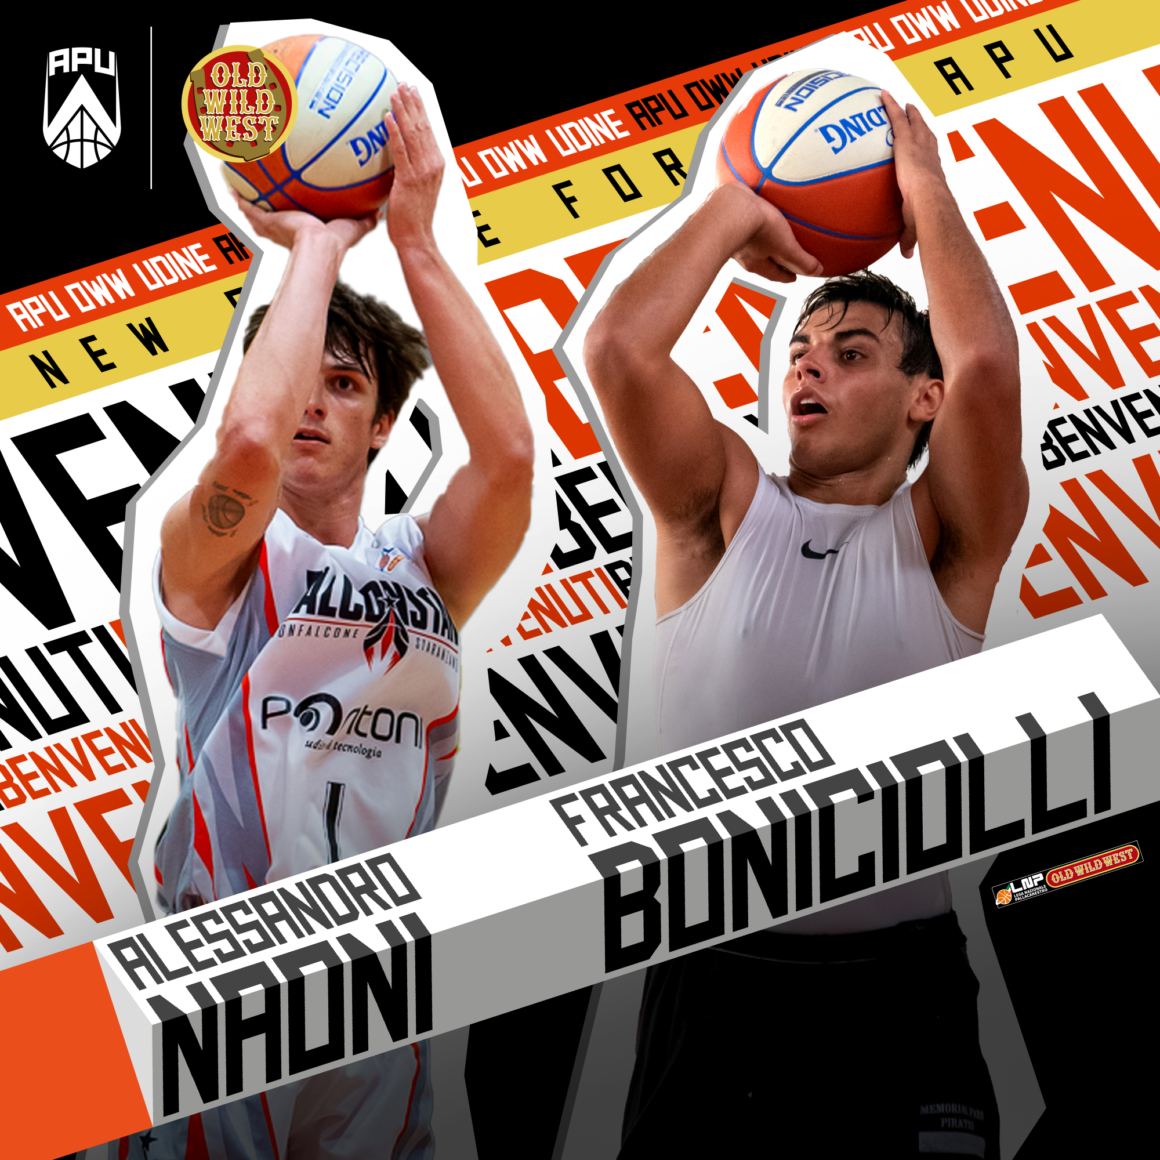 Boniciolli Jr e Naoni: la freschezza di due Under per l’Apu Old Wild West Udine